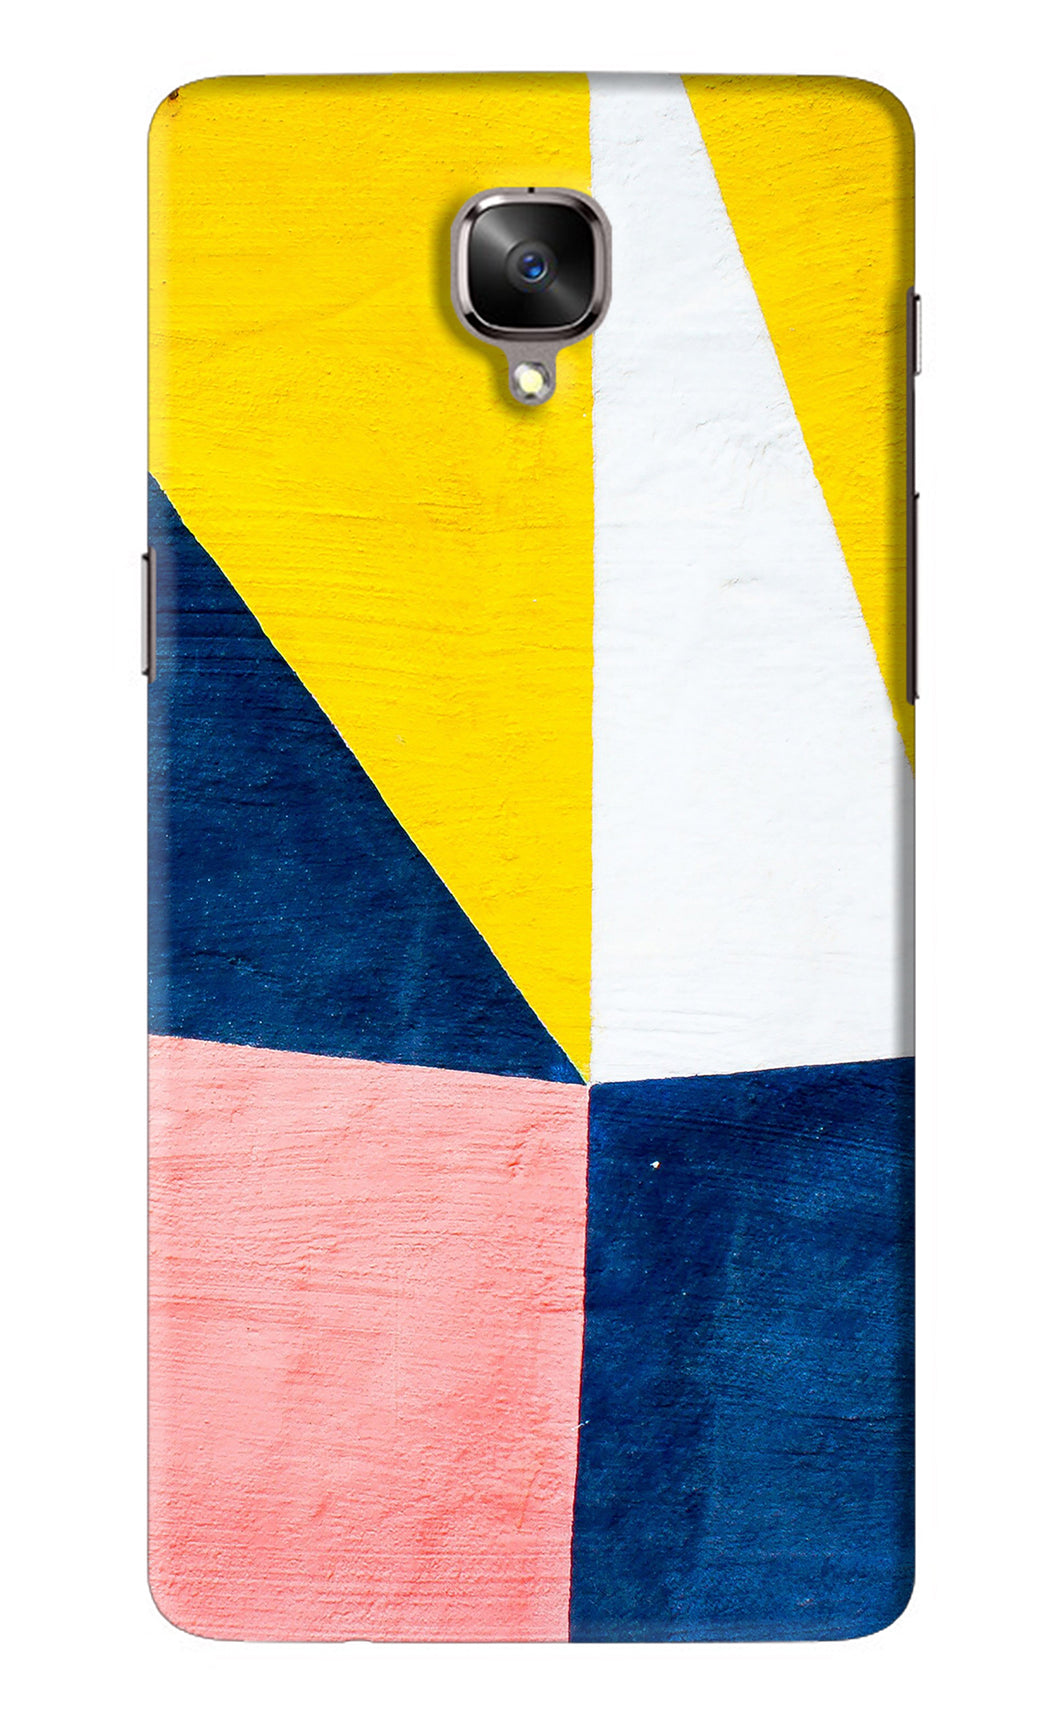 Colourful Art OnePlus 3T Back Skin Wrap